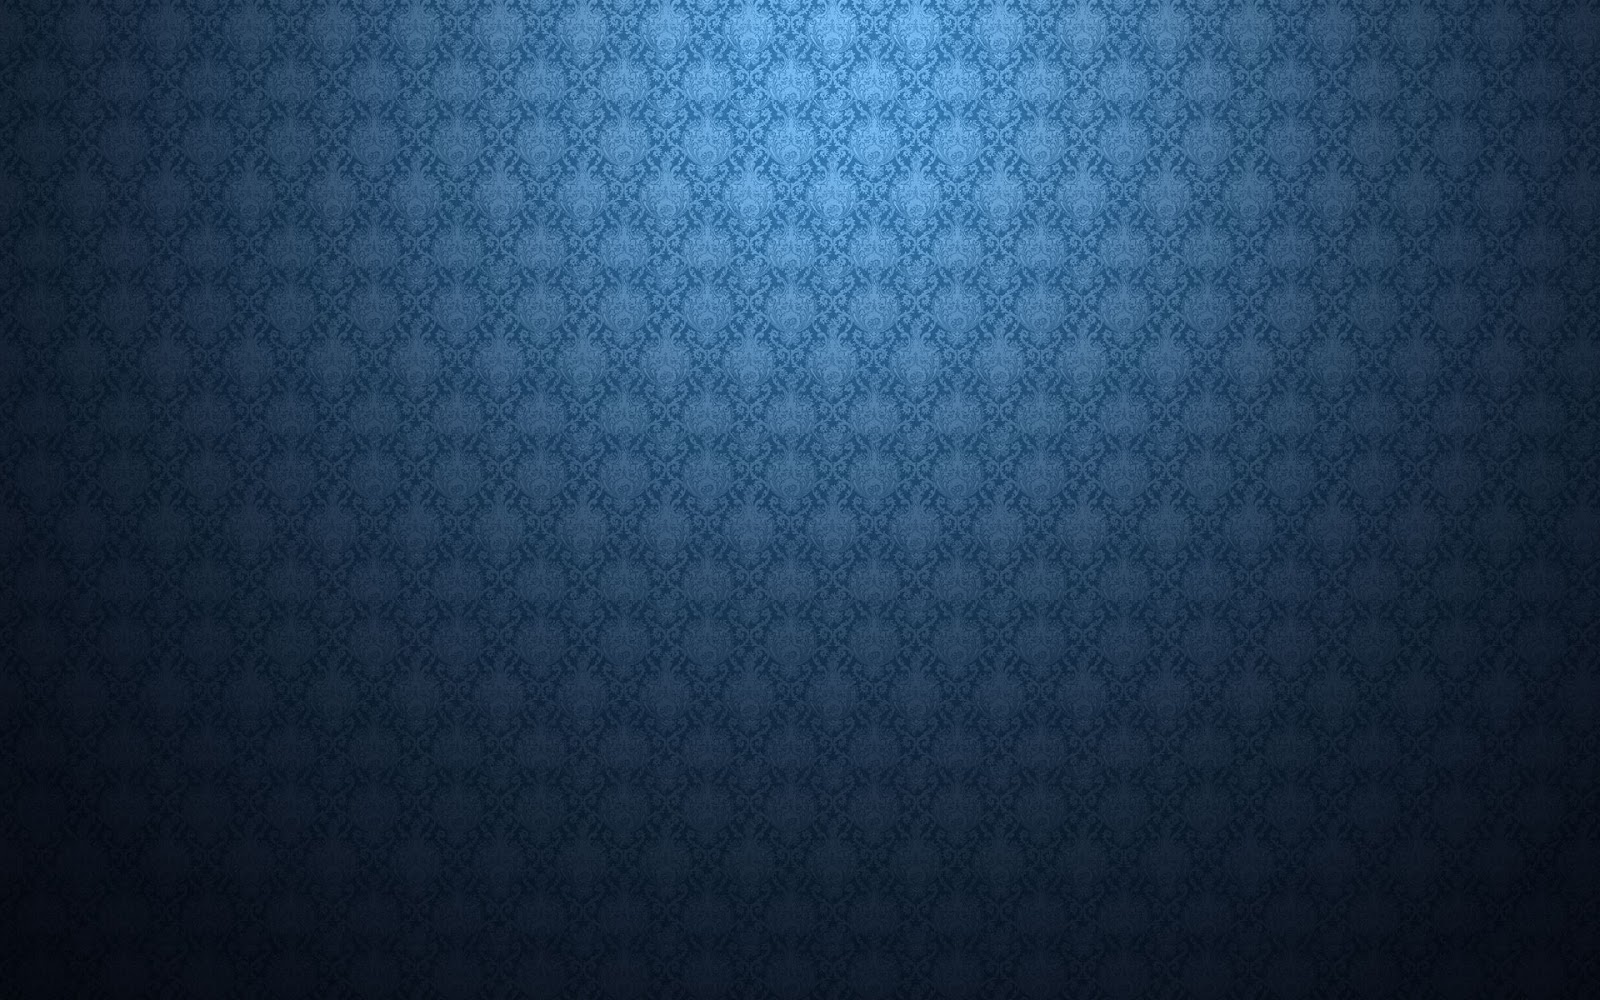 BLUE Art Background Wallpaper Image HD Zeromin0